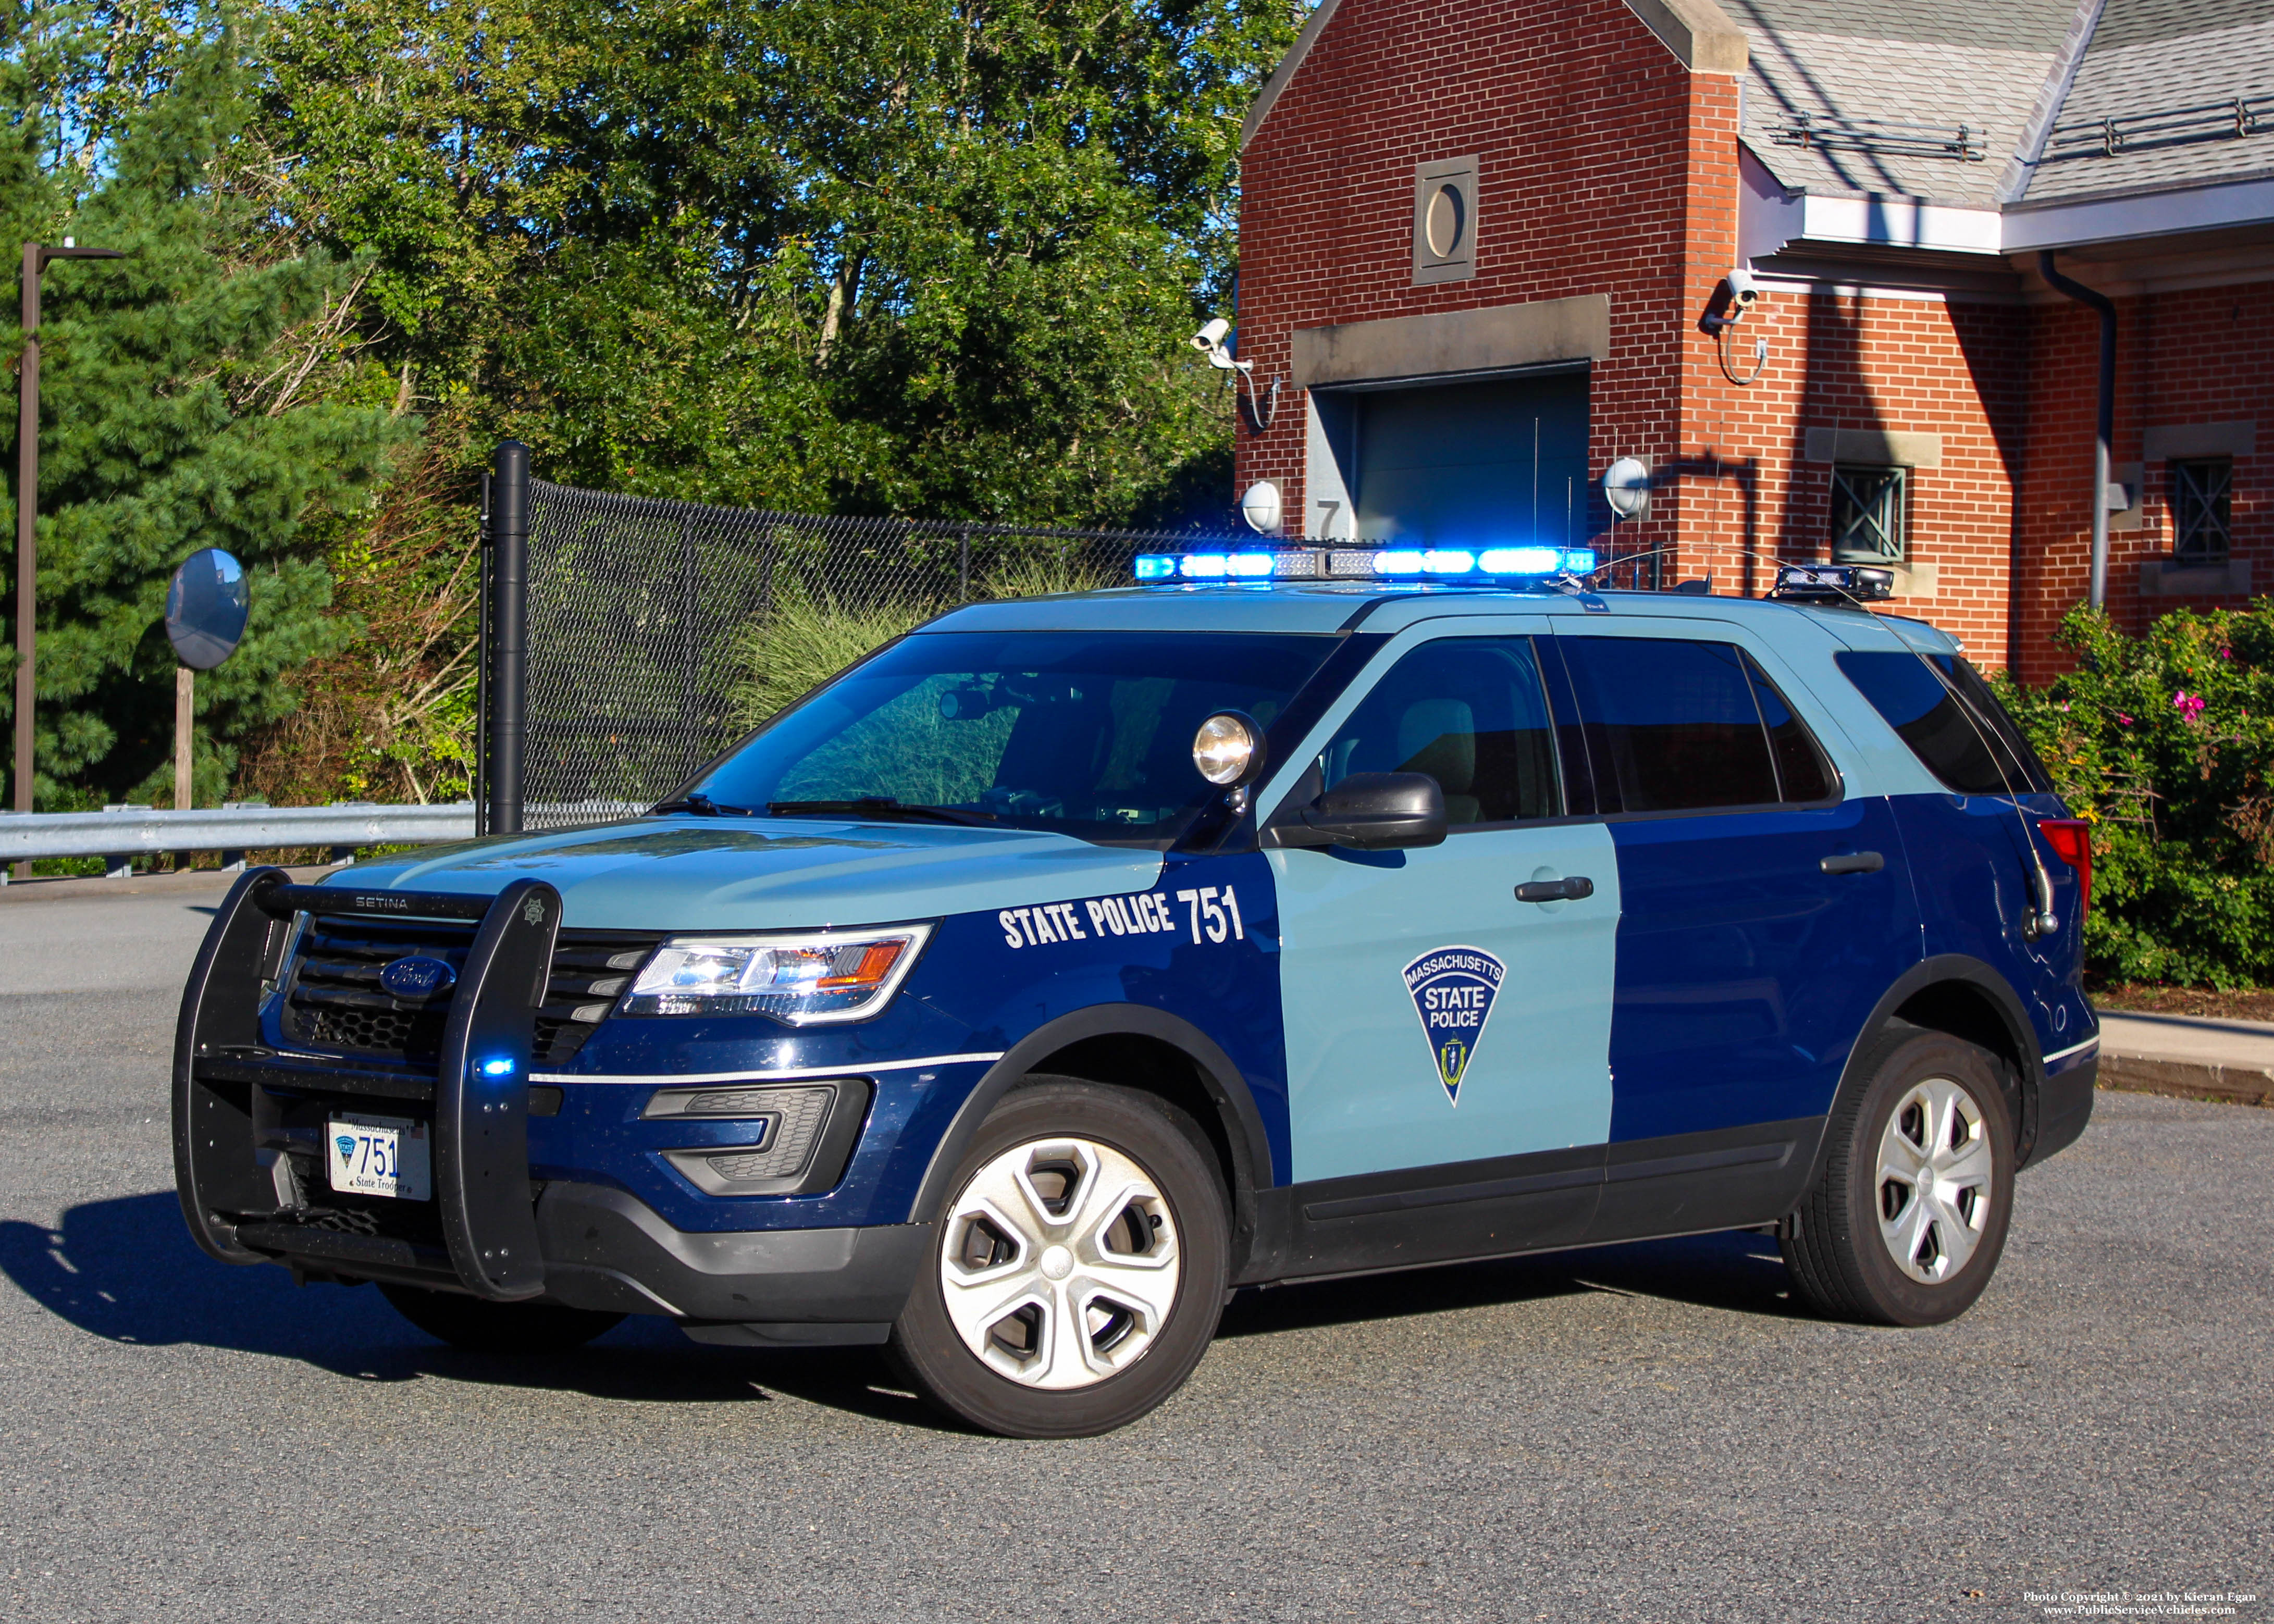 A photo  of Massachusetts State Police
            Cruiser 751, a 2019 Ford Police Interceptor Utility             taken by Kieran Egan